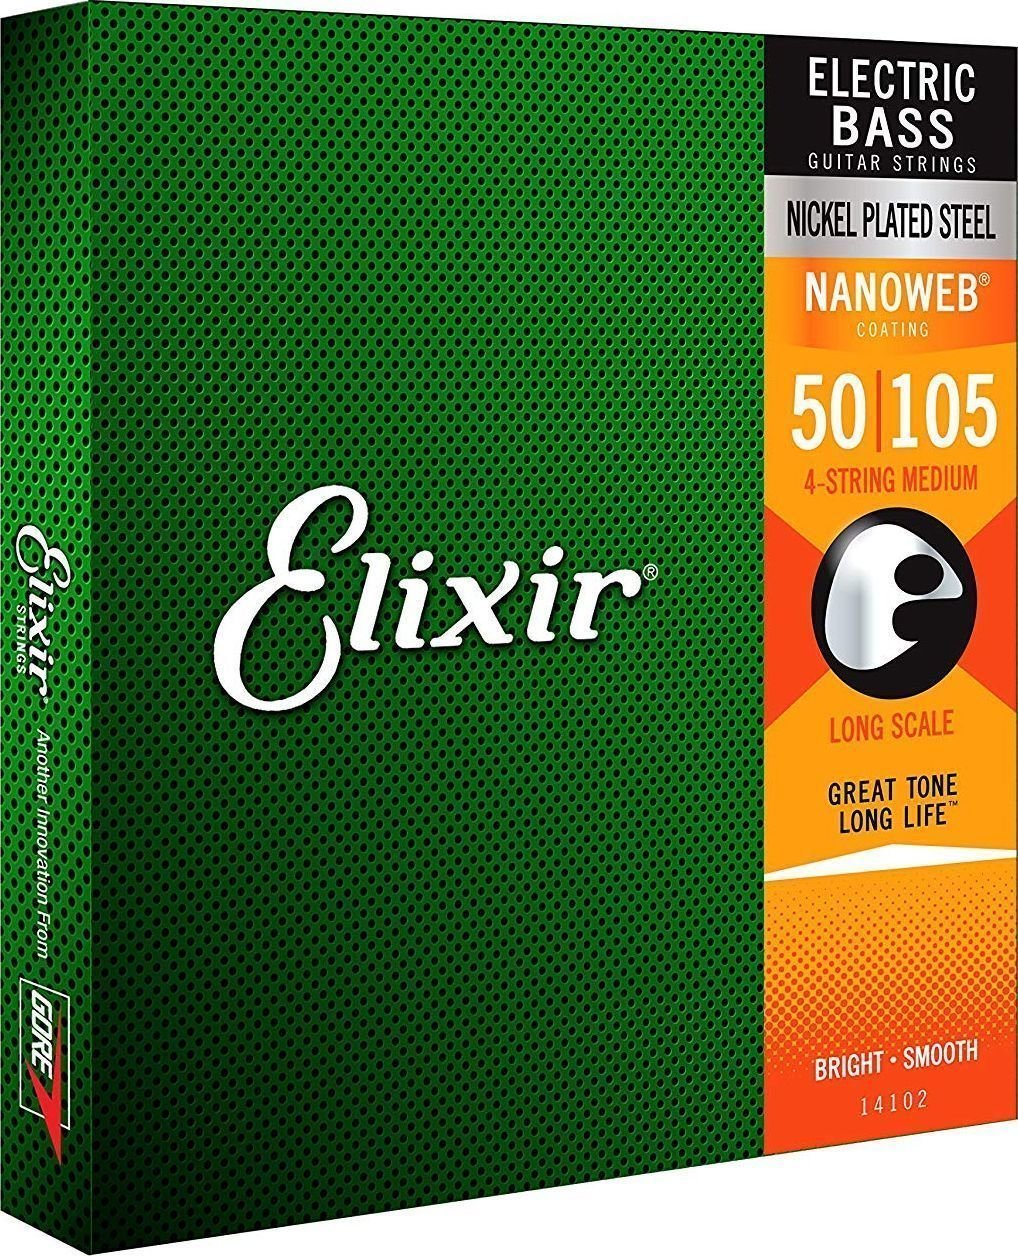 Bassguitar strings Elixir 14102 Nanoweb